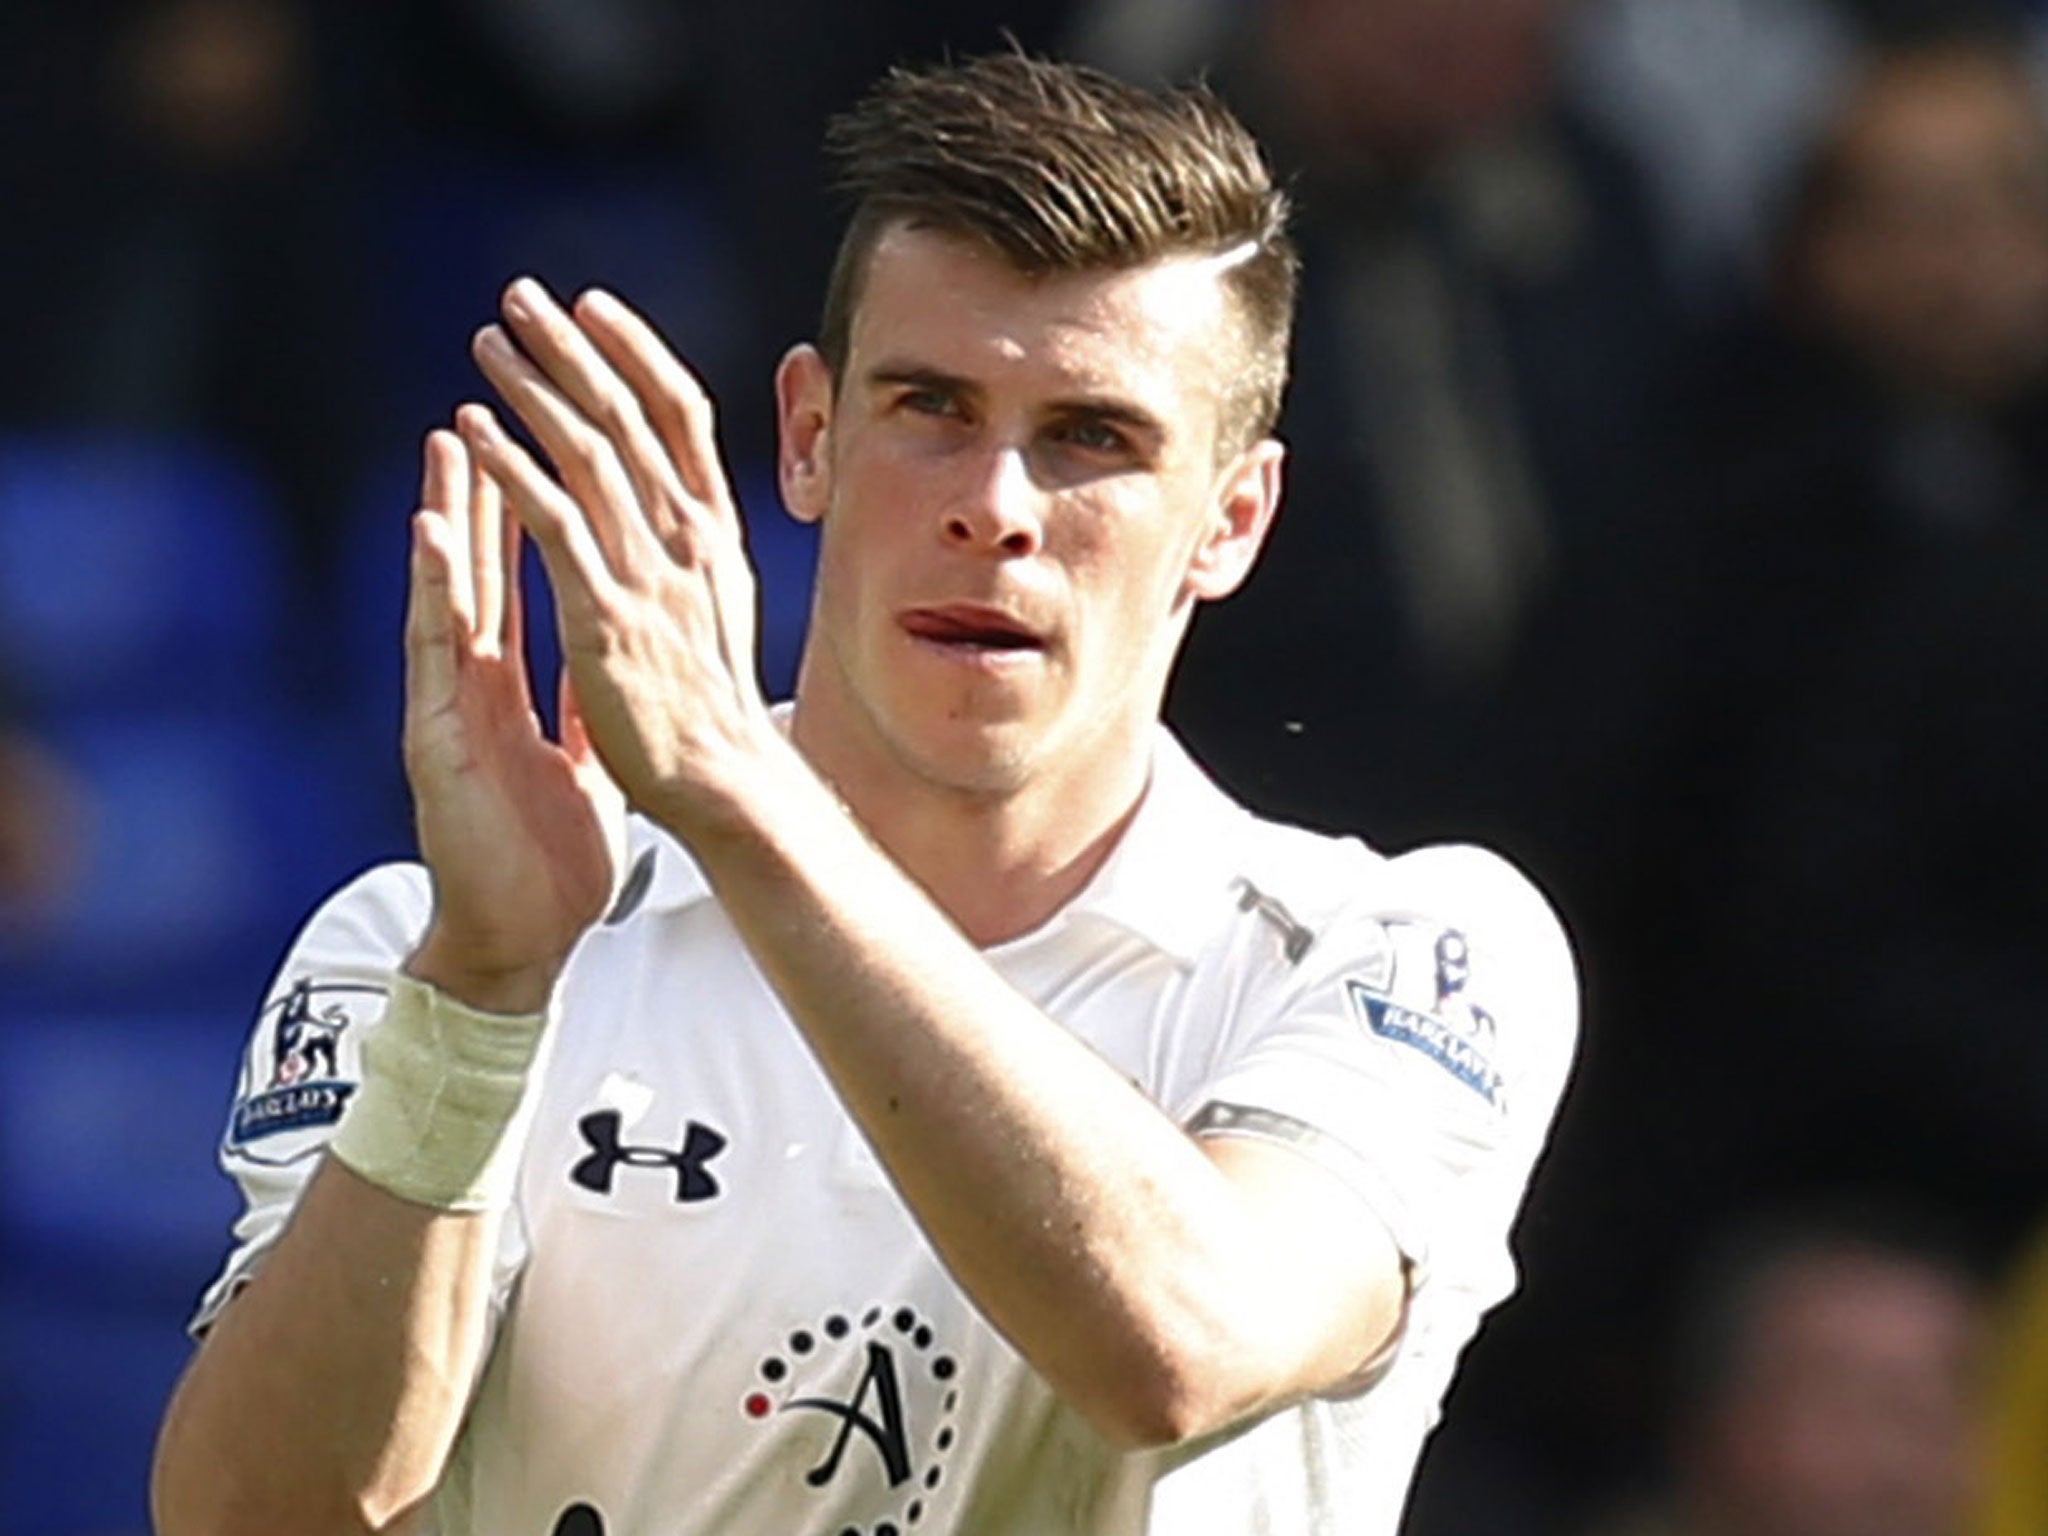 Tottenham’s triple player of the year award winner Gareth Bale